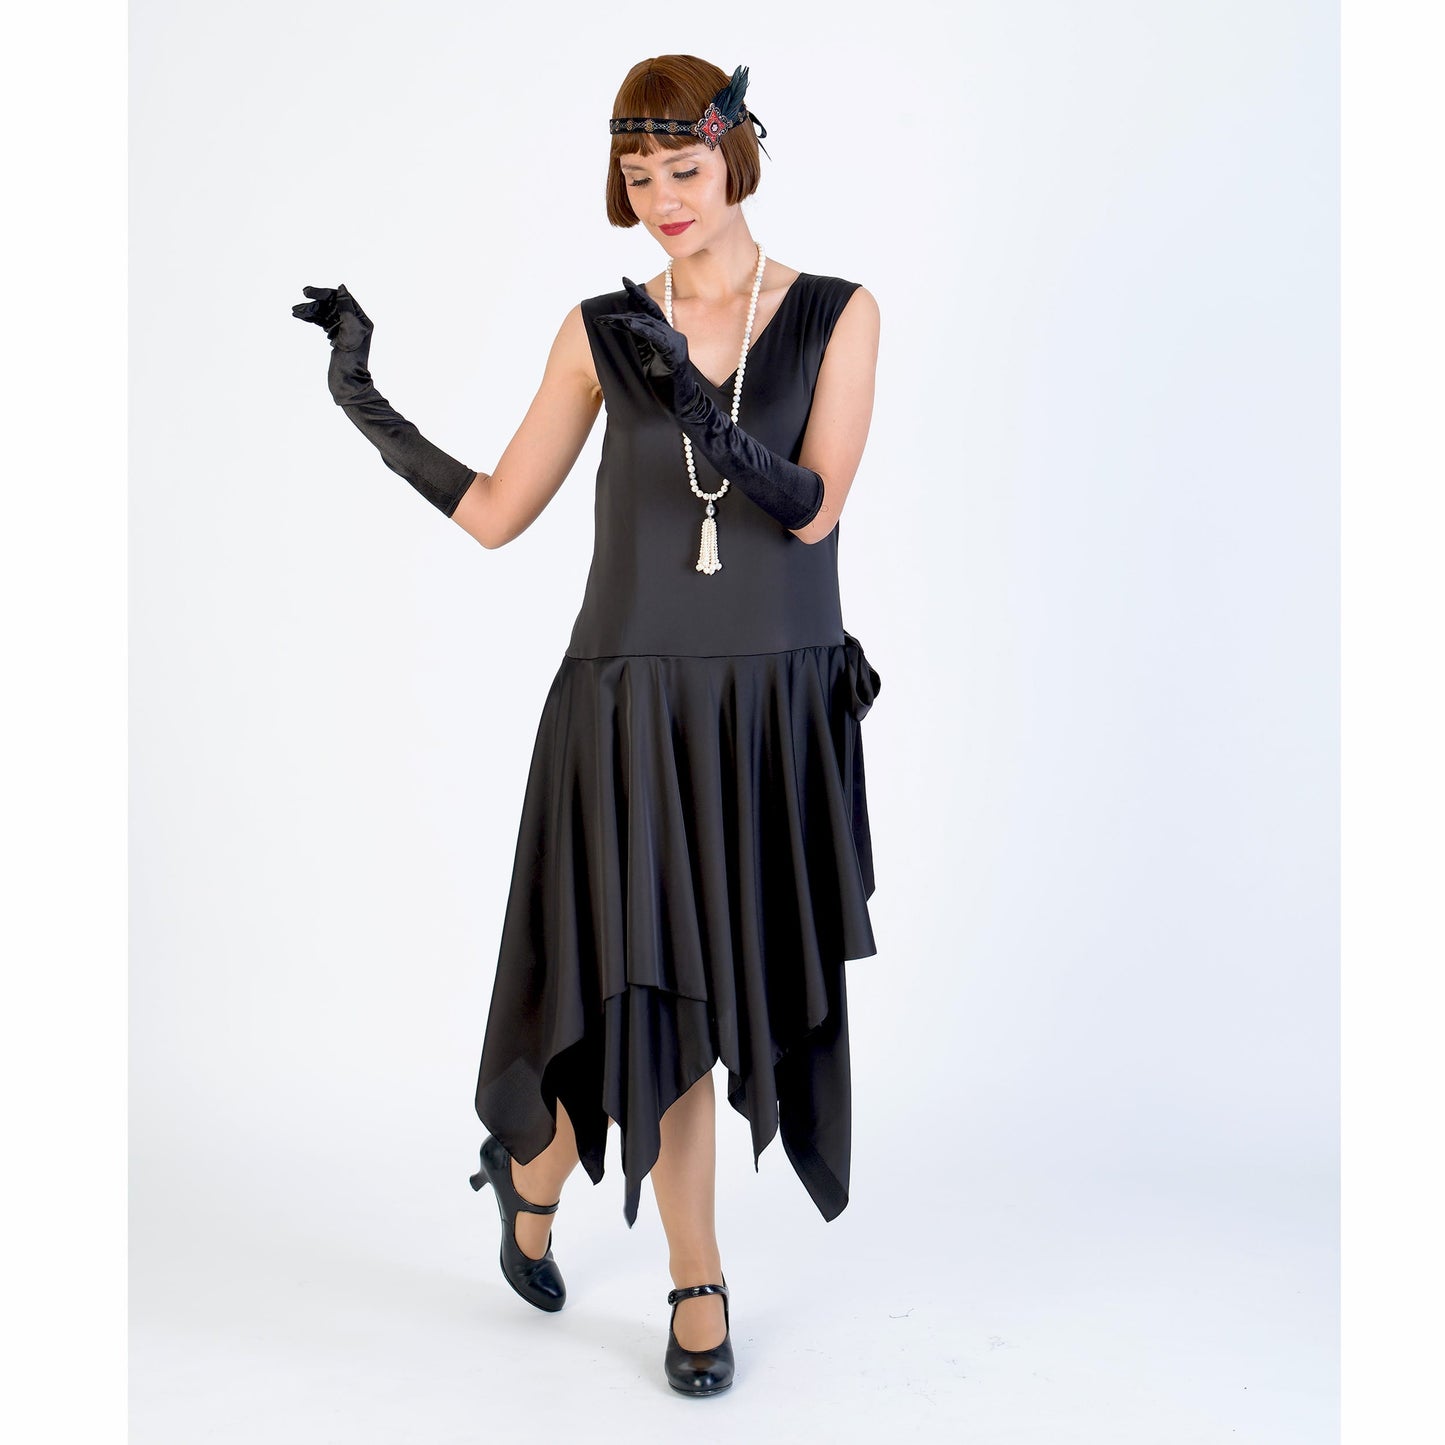 Black 1920s evening dress of satin with handkerchief skirt